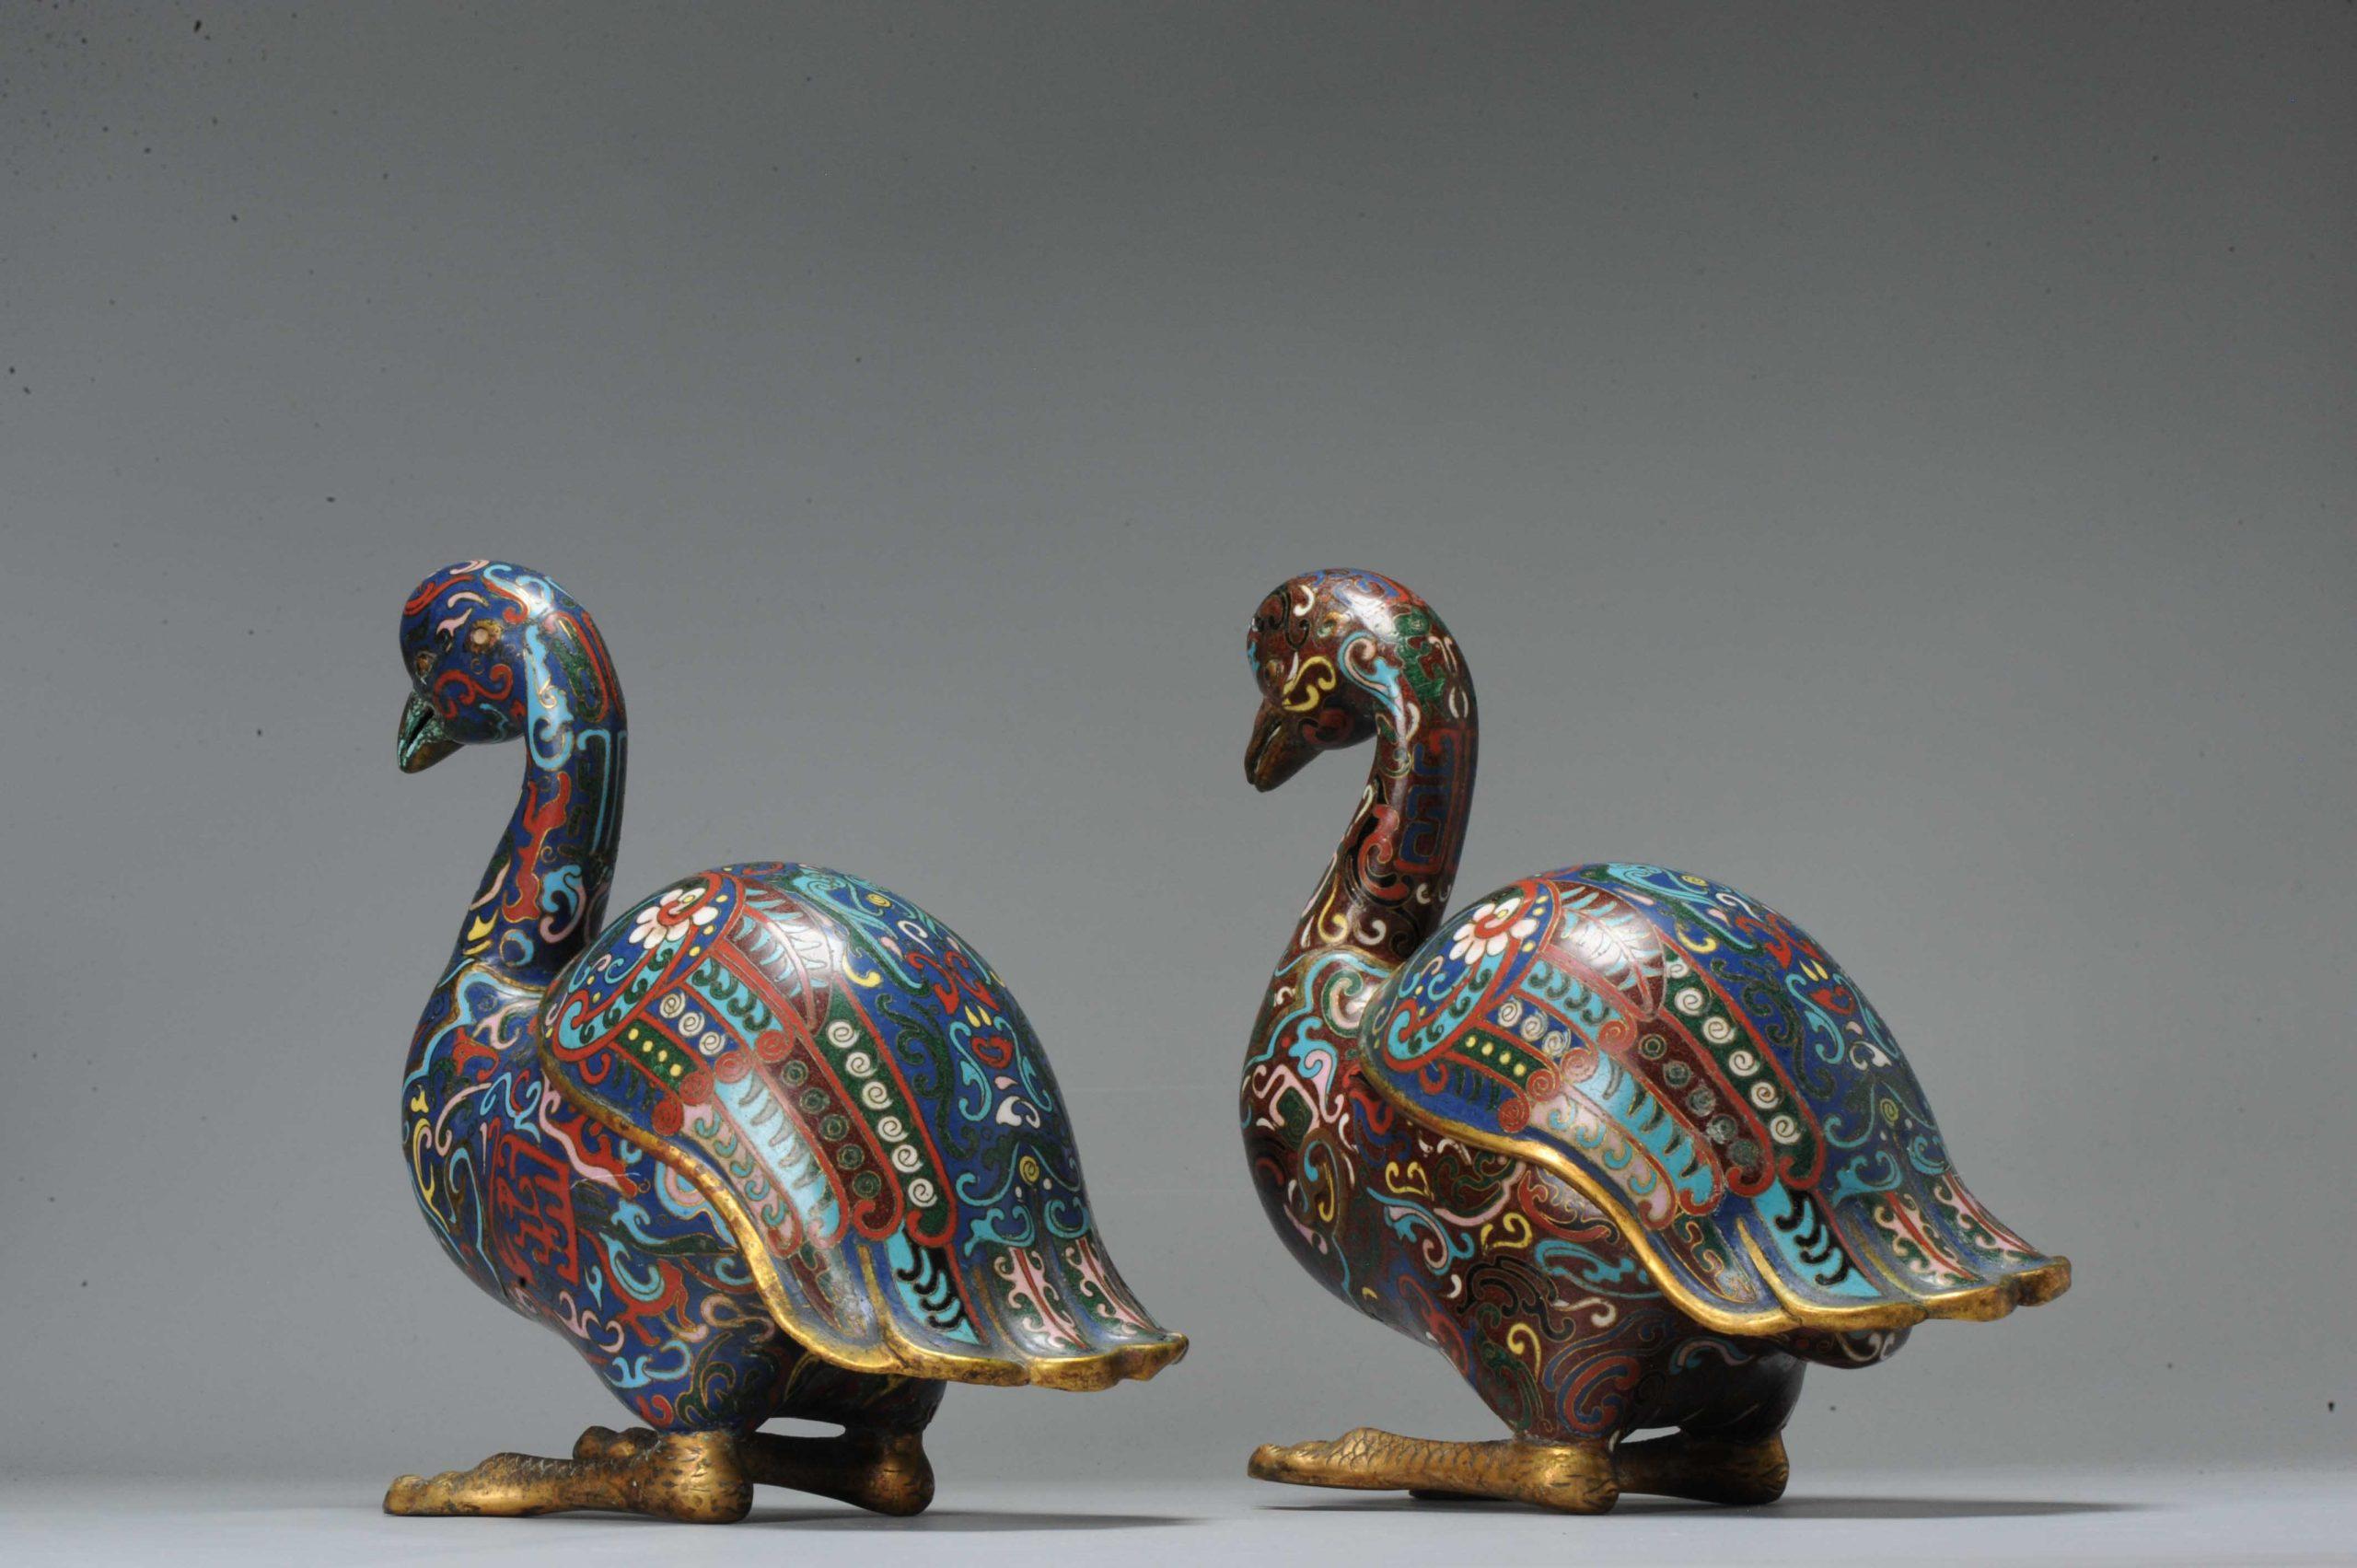 Antique Bronze / Copper Cloisonné Burner Inscense Koro Geese or Swan For Sale 4